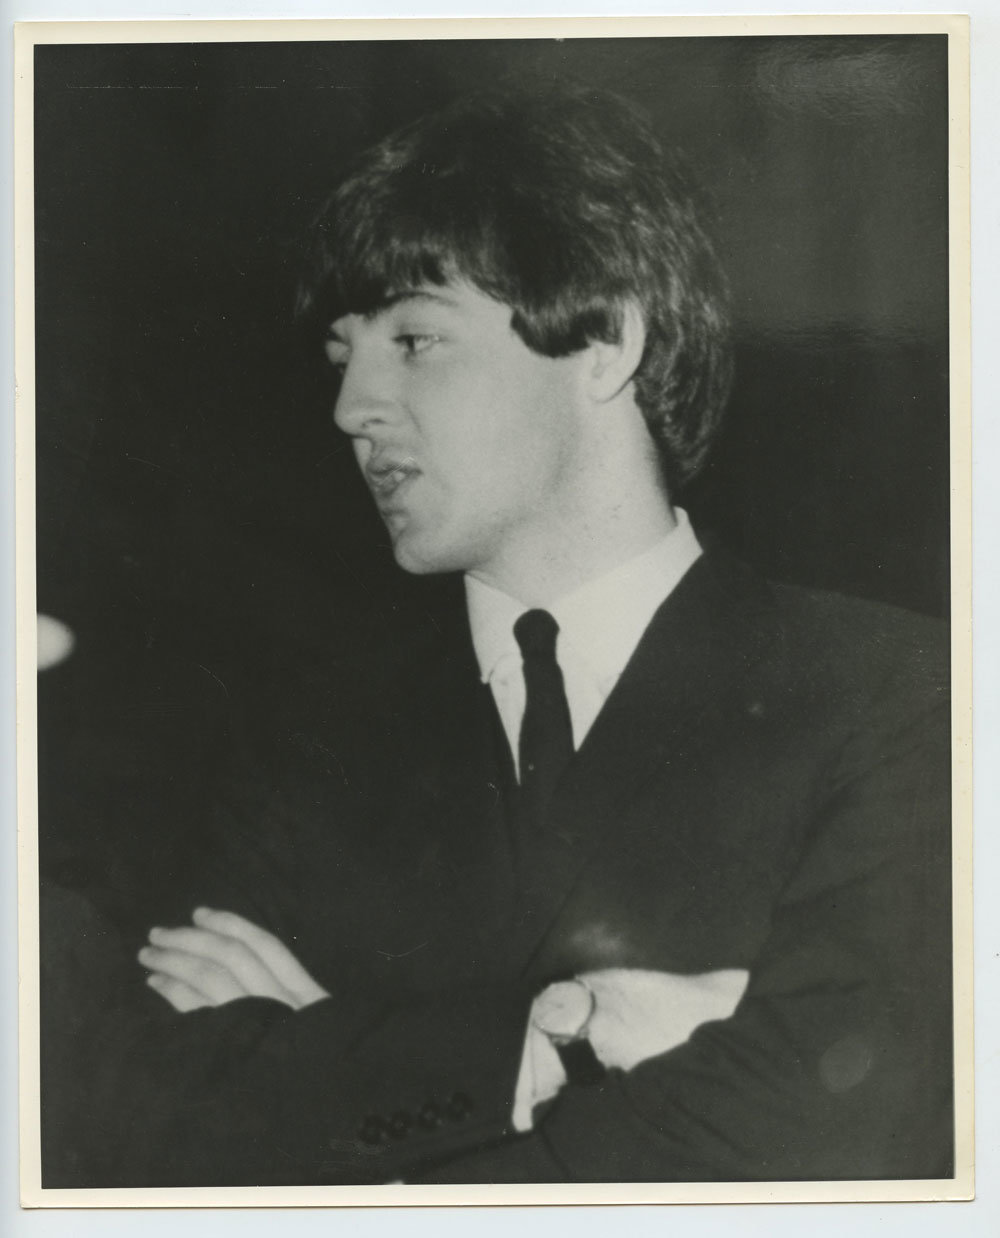 The Beatles Photo Paul McCartney 1964 Publicity Promo